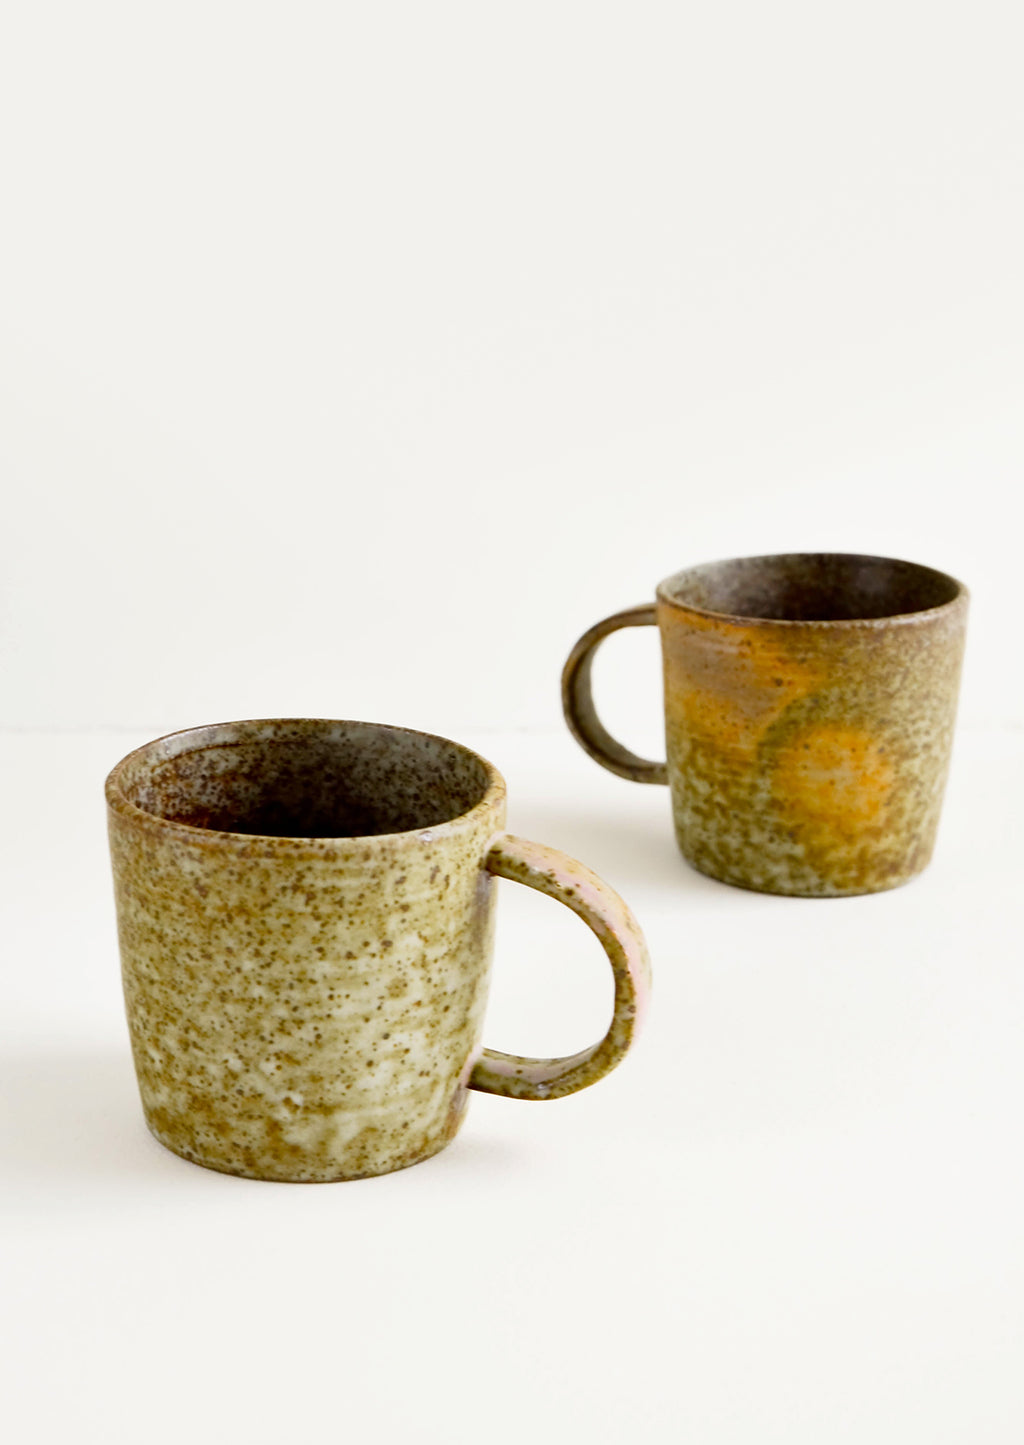 1: Onsen Speckled Ceramic Mug in  - LEIF